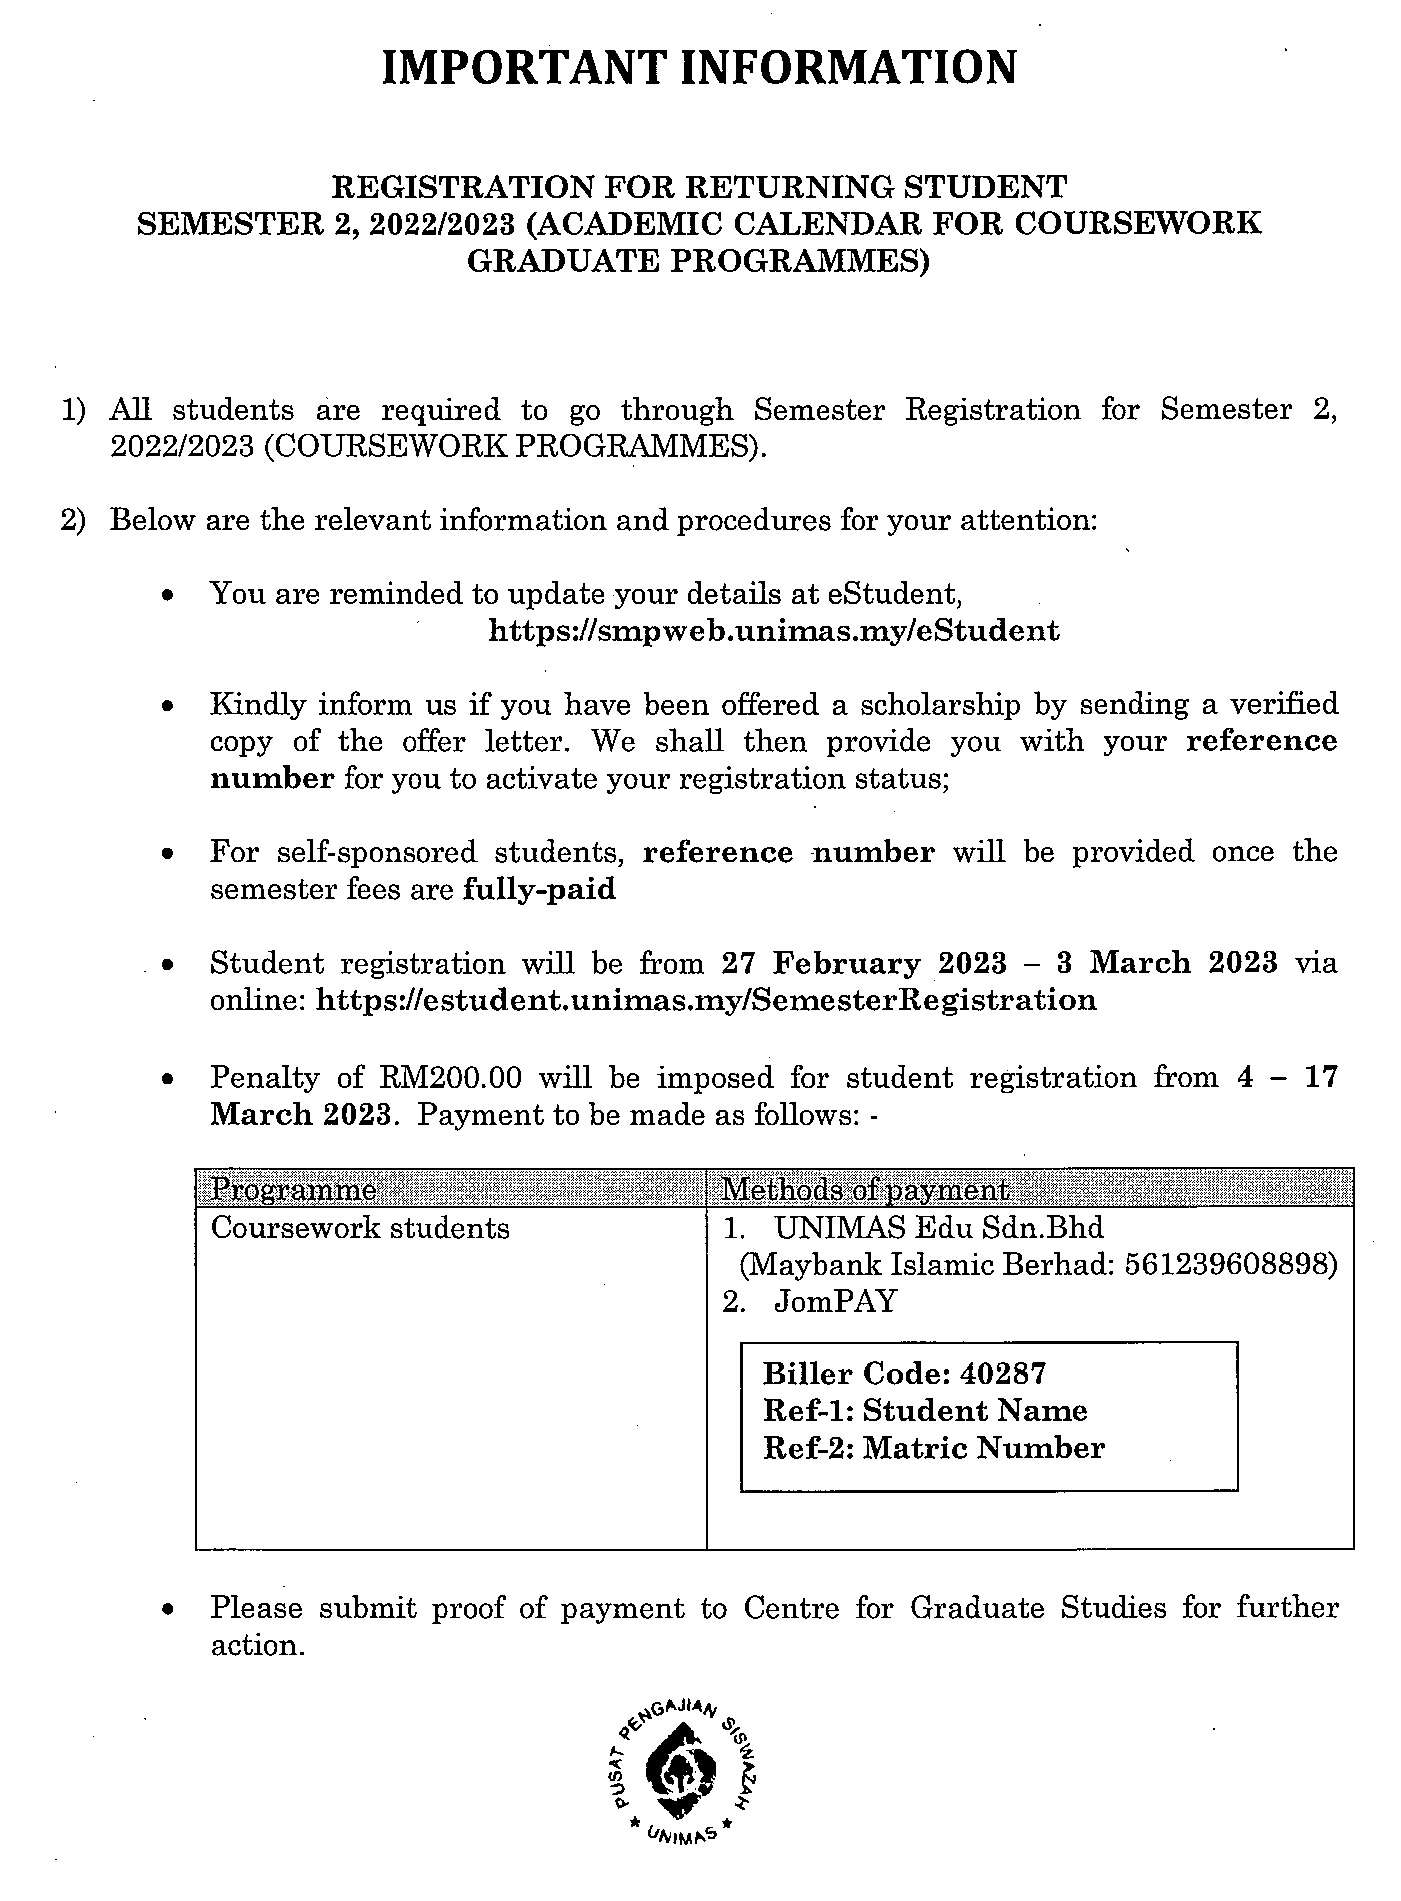 notice registration for returning of student Sem 2 2022 2023 (Academic Calendar).jpg